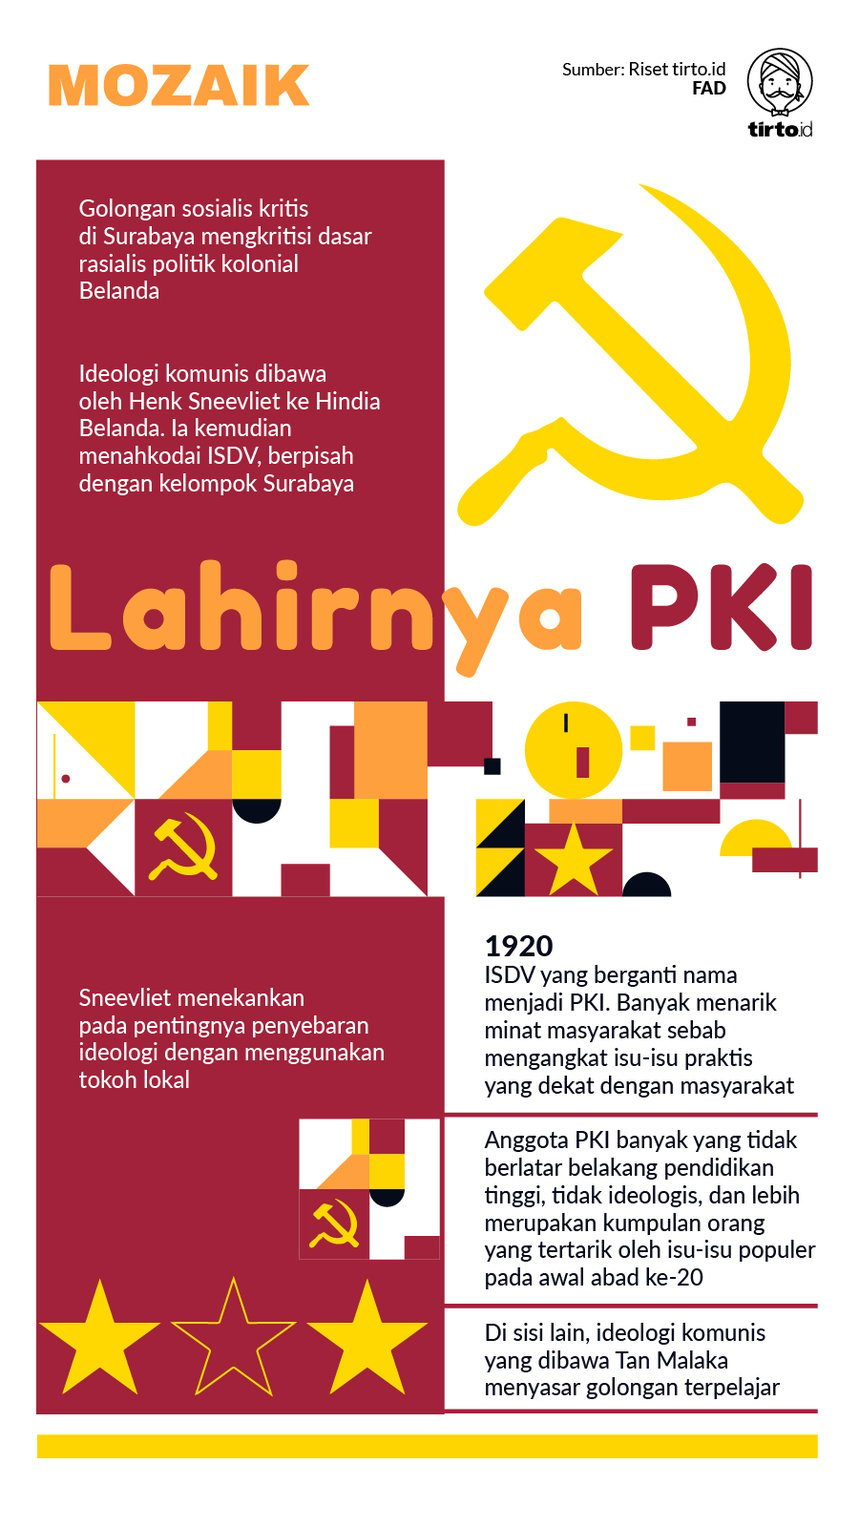 Infografik Mozaik Lahirnya PKI